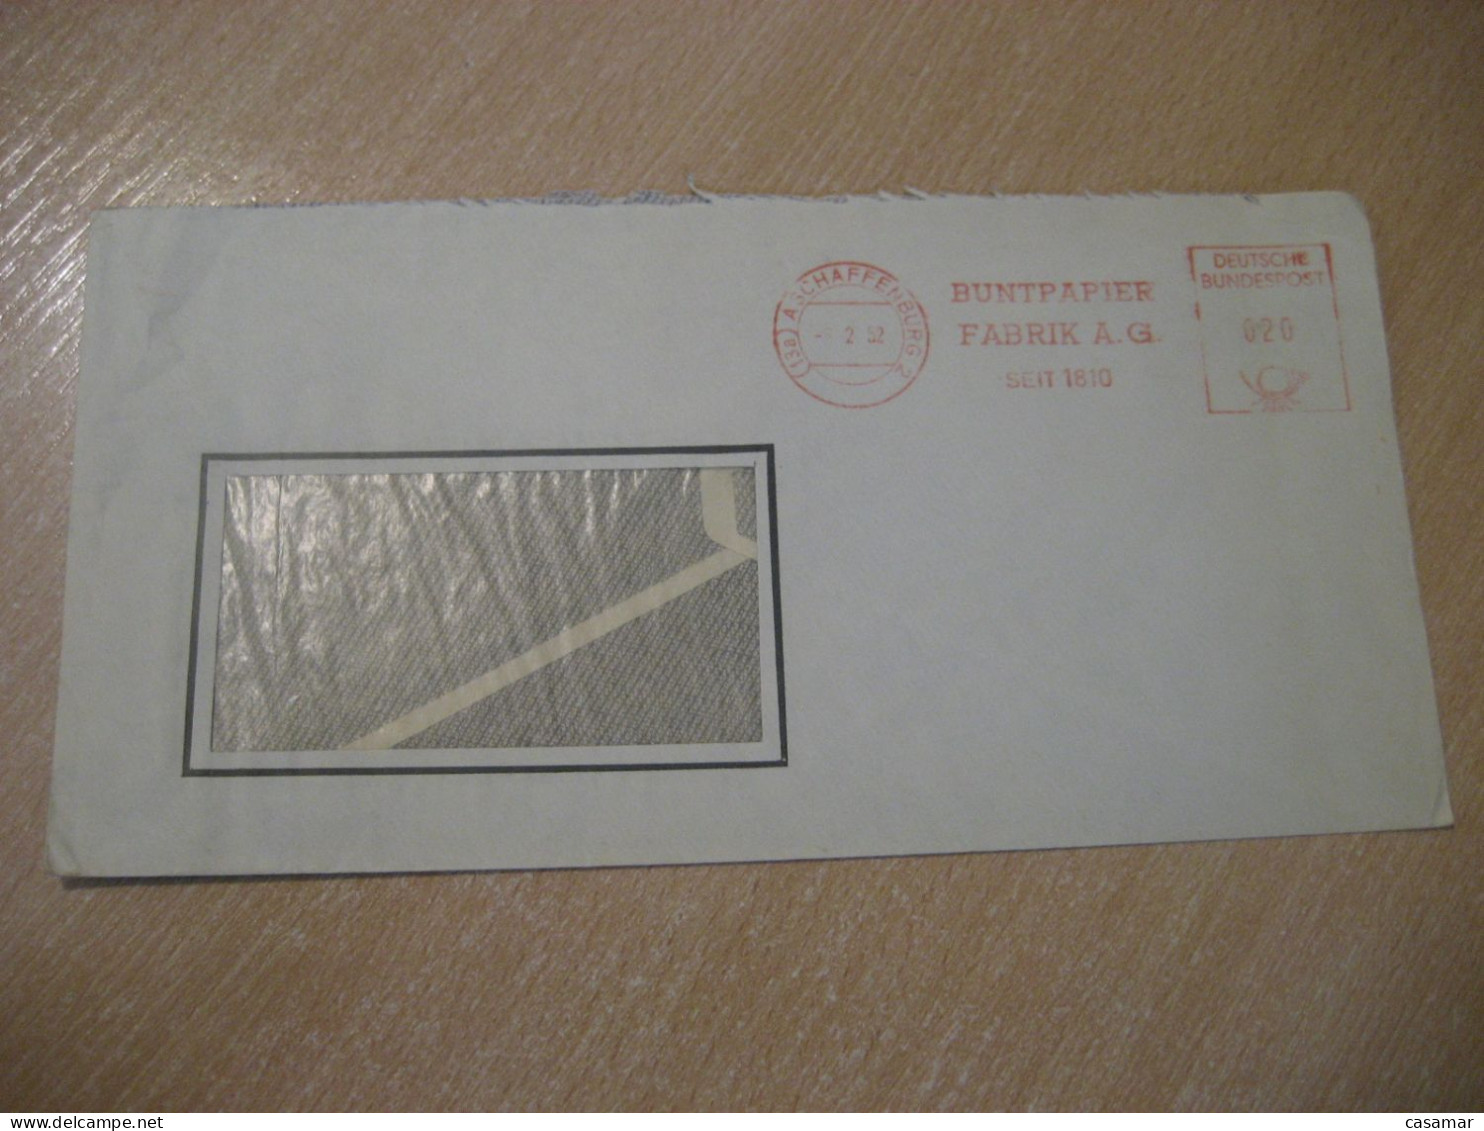 ASCHAFFENBURG 1952 Buntpapier Fabrik A.G. Meter Mail Cancel Cover GERMANY - Briefe U. Dokumente